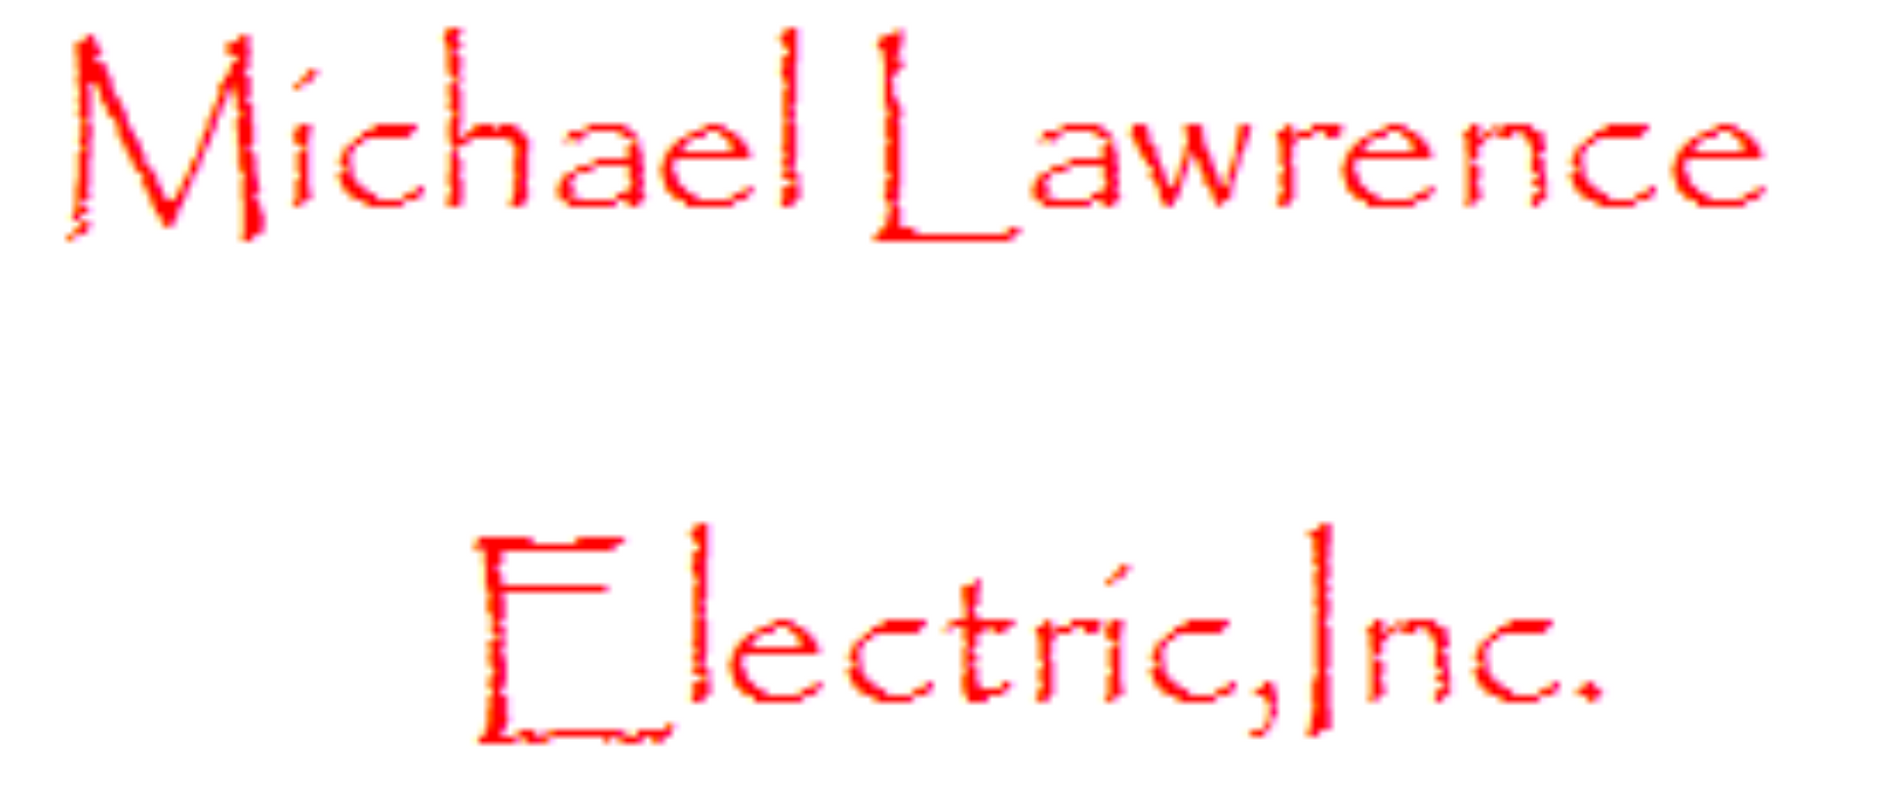 Michael Lawrence Electric Inc - Logo
